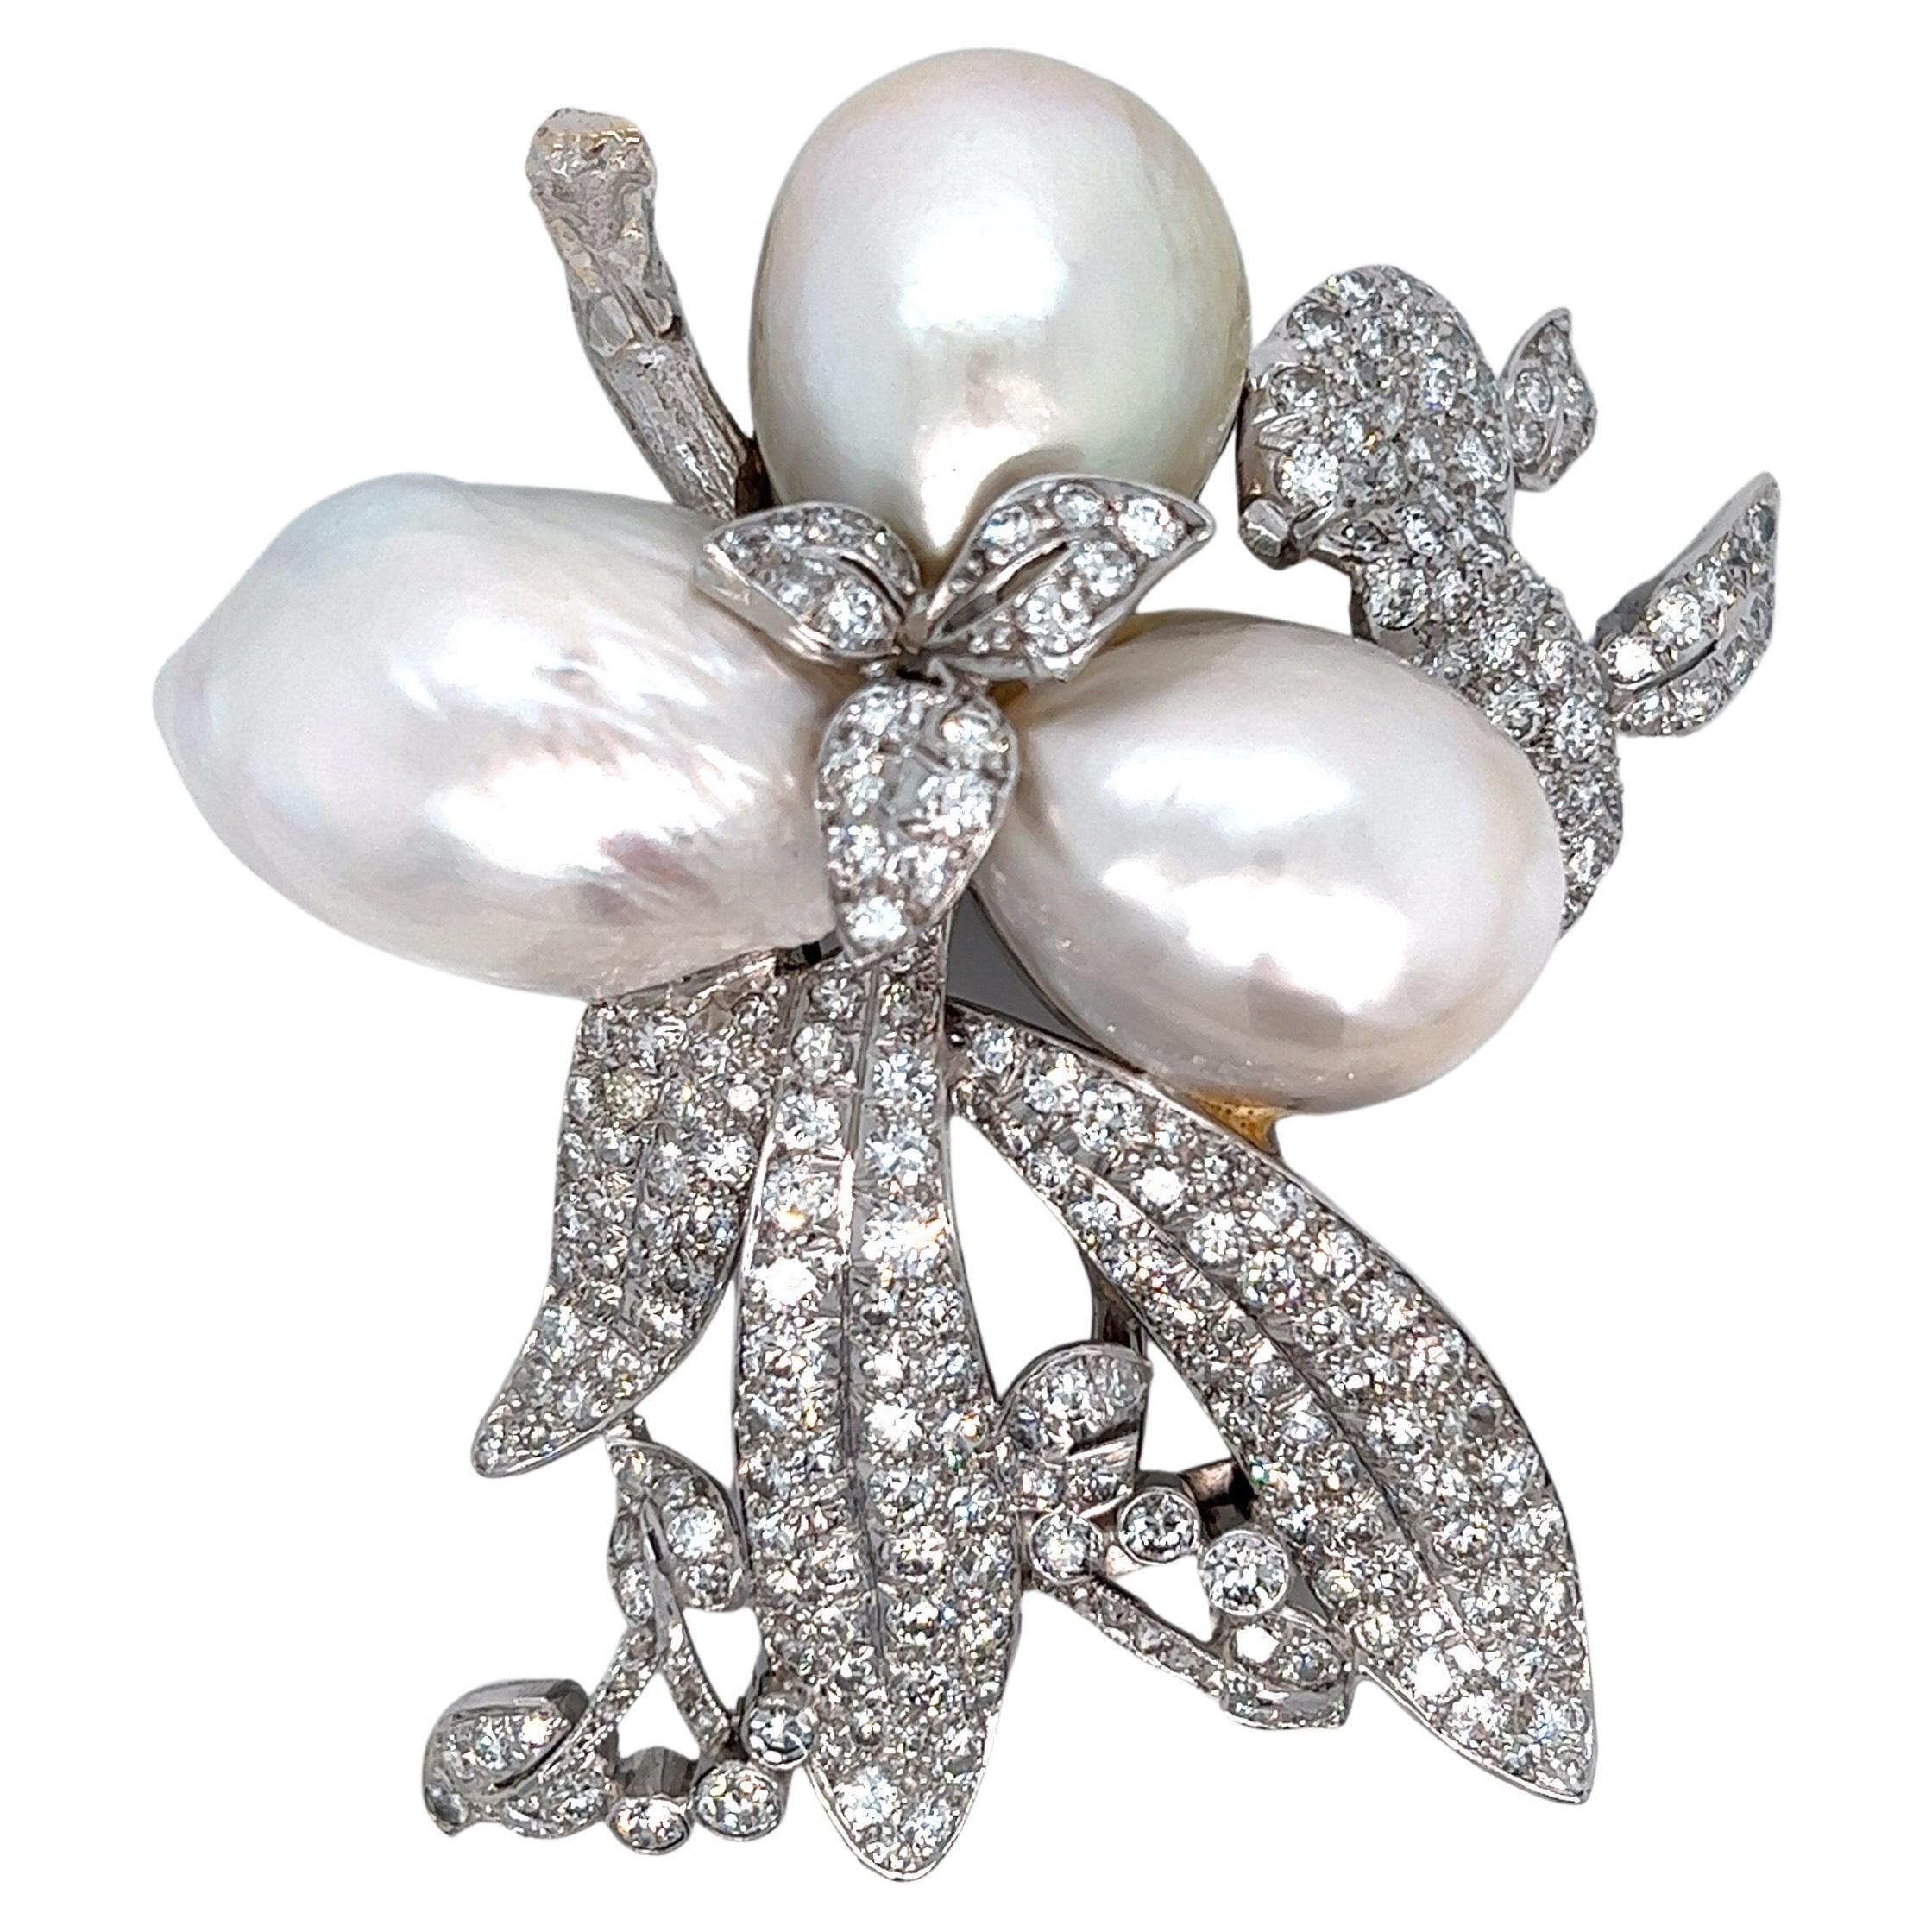 Seaman Schepps Perlen-Diamanten-Brosche